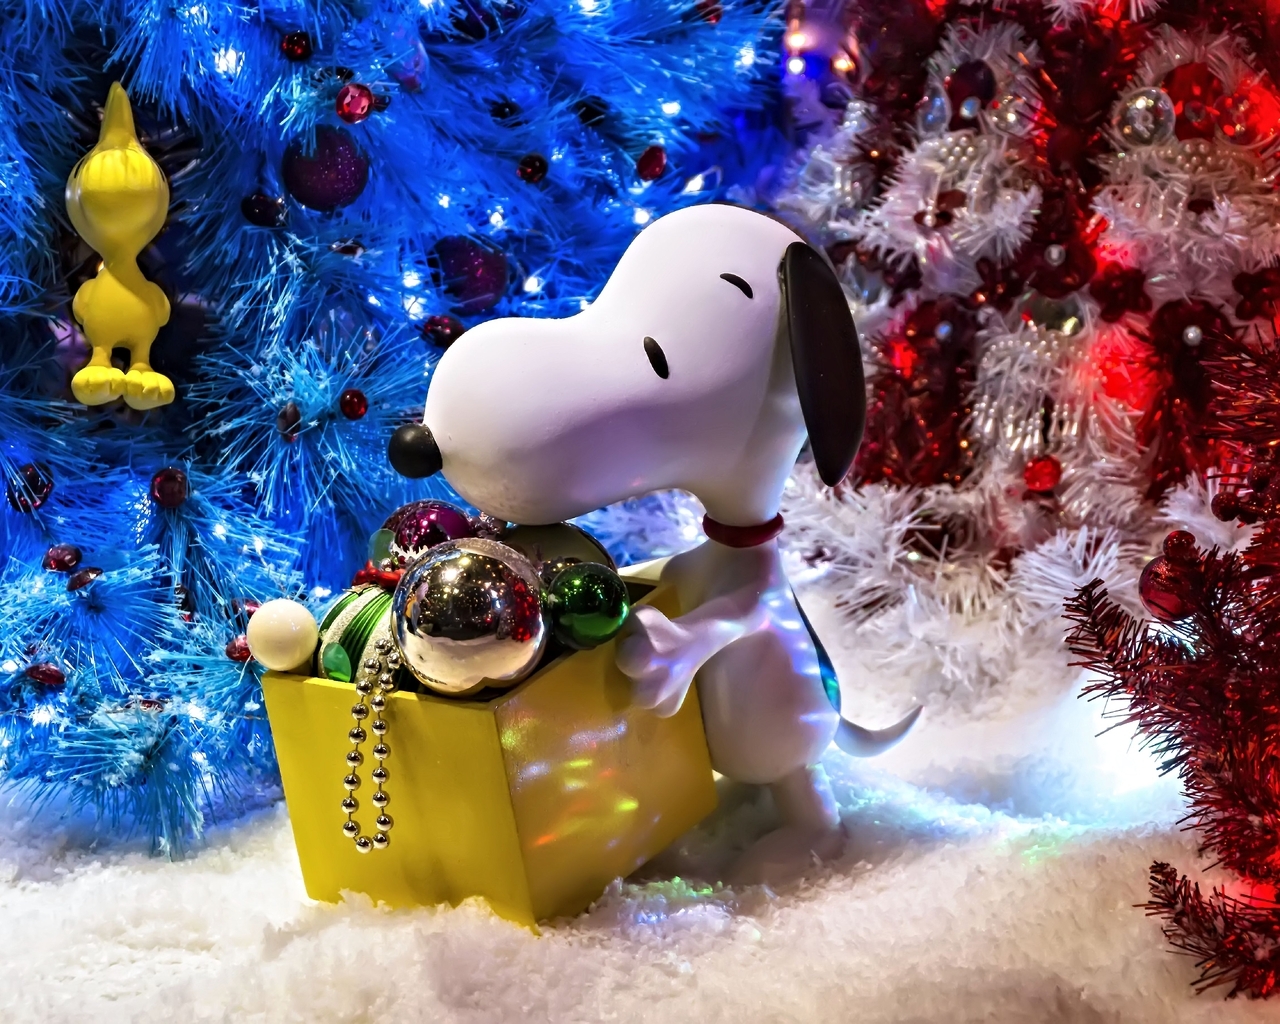 Картинка: Ёлка, шары, бусинки, игрушка, щенок, коробка, Новый год, снег, украшение, праздник